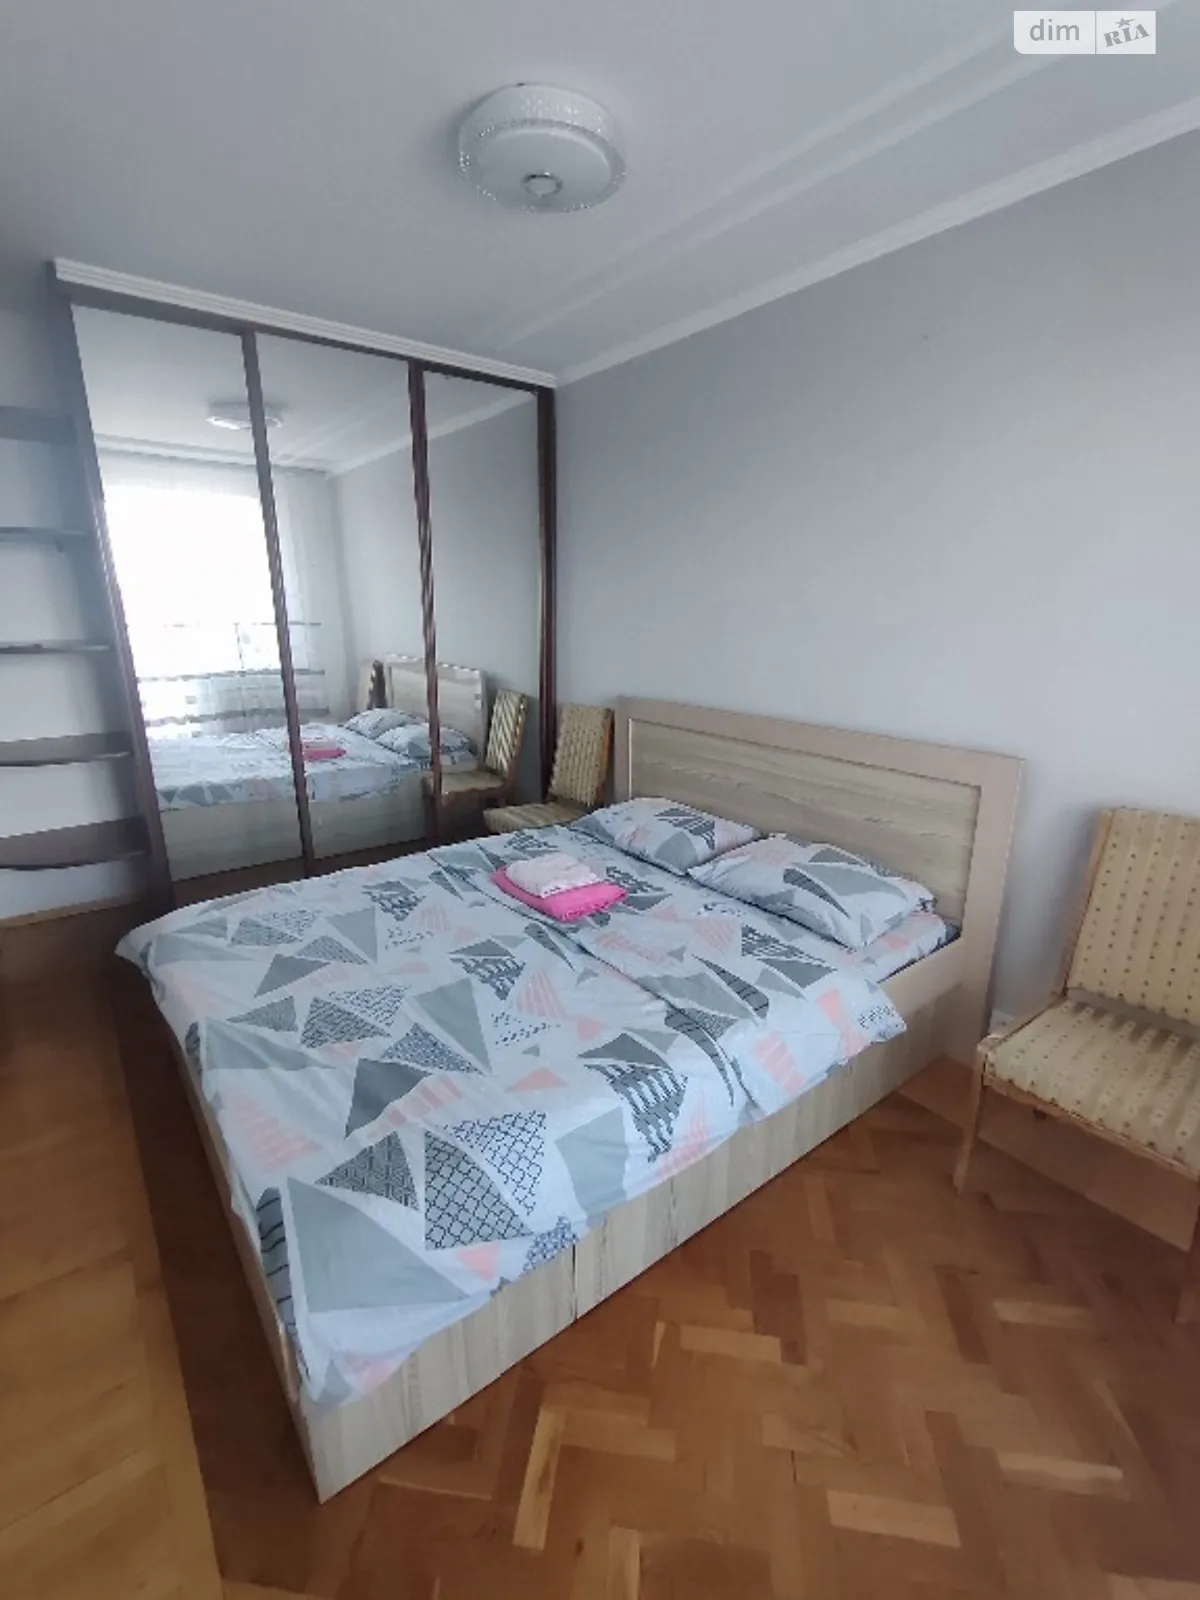 2-кімнатна квартира у Тернополі, цена: 800 грн - фото 1